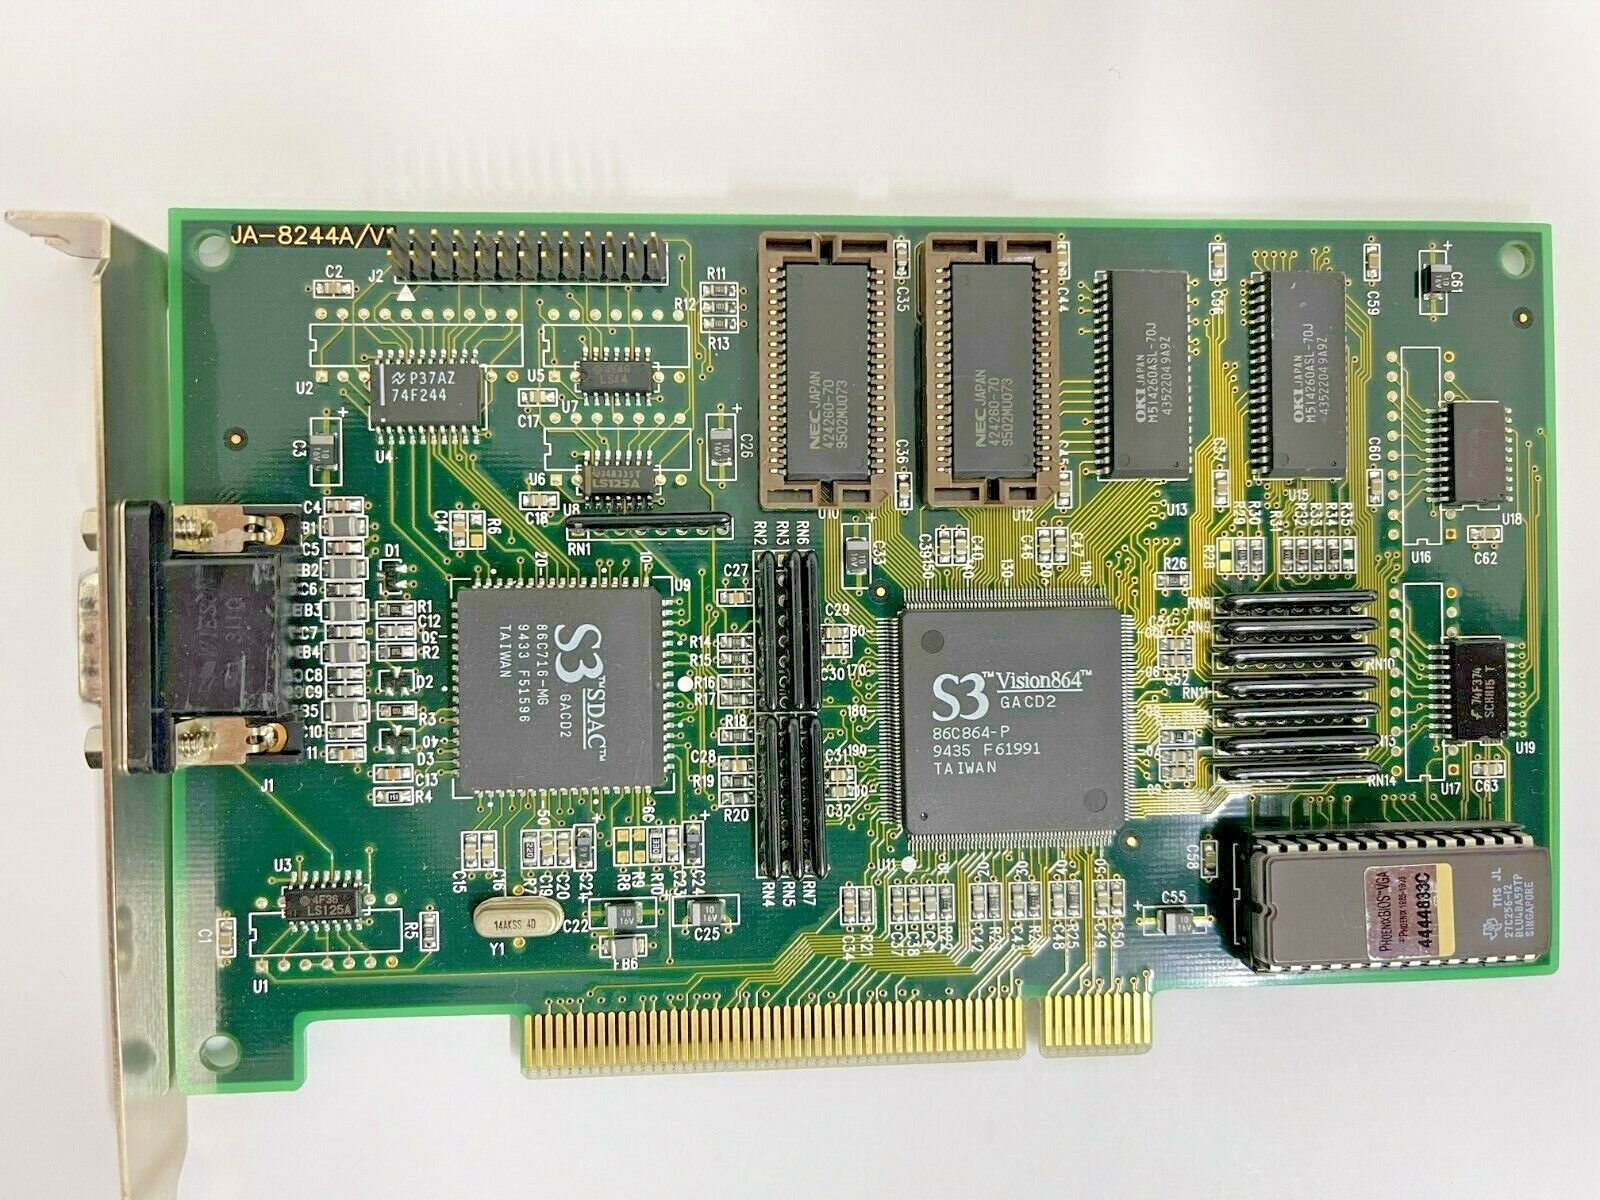 VINTAGE JAX S3 VISION864 2MEG PCI 16-BIT ISA VGA CARD JA-8244A/VI PHOENIX MXB37